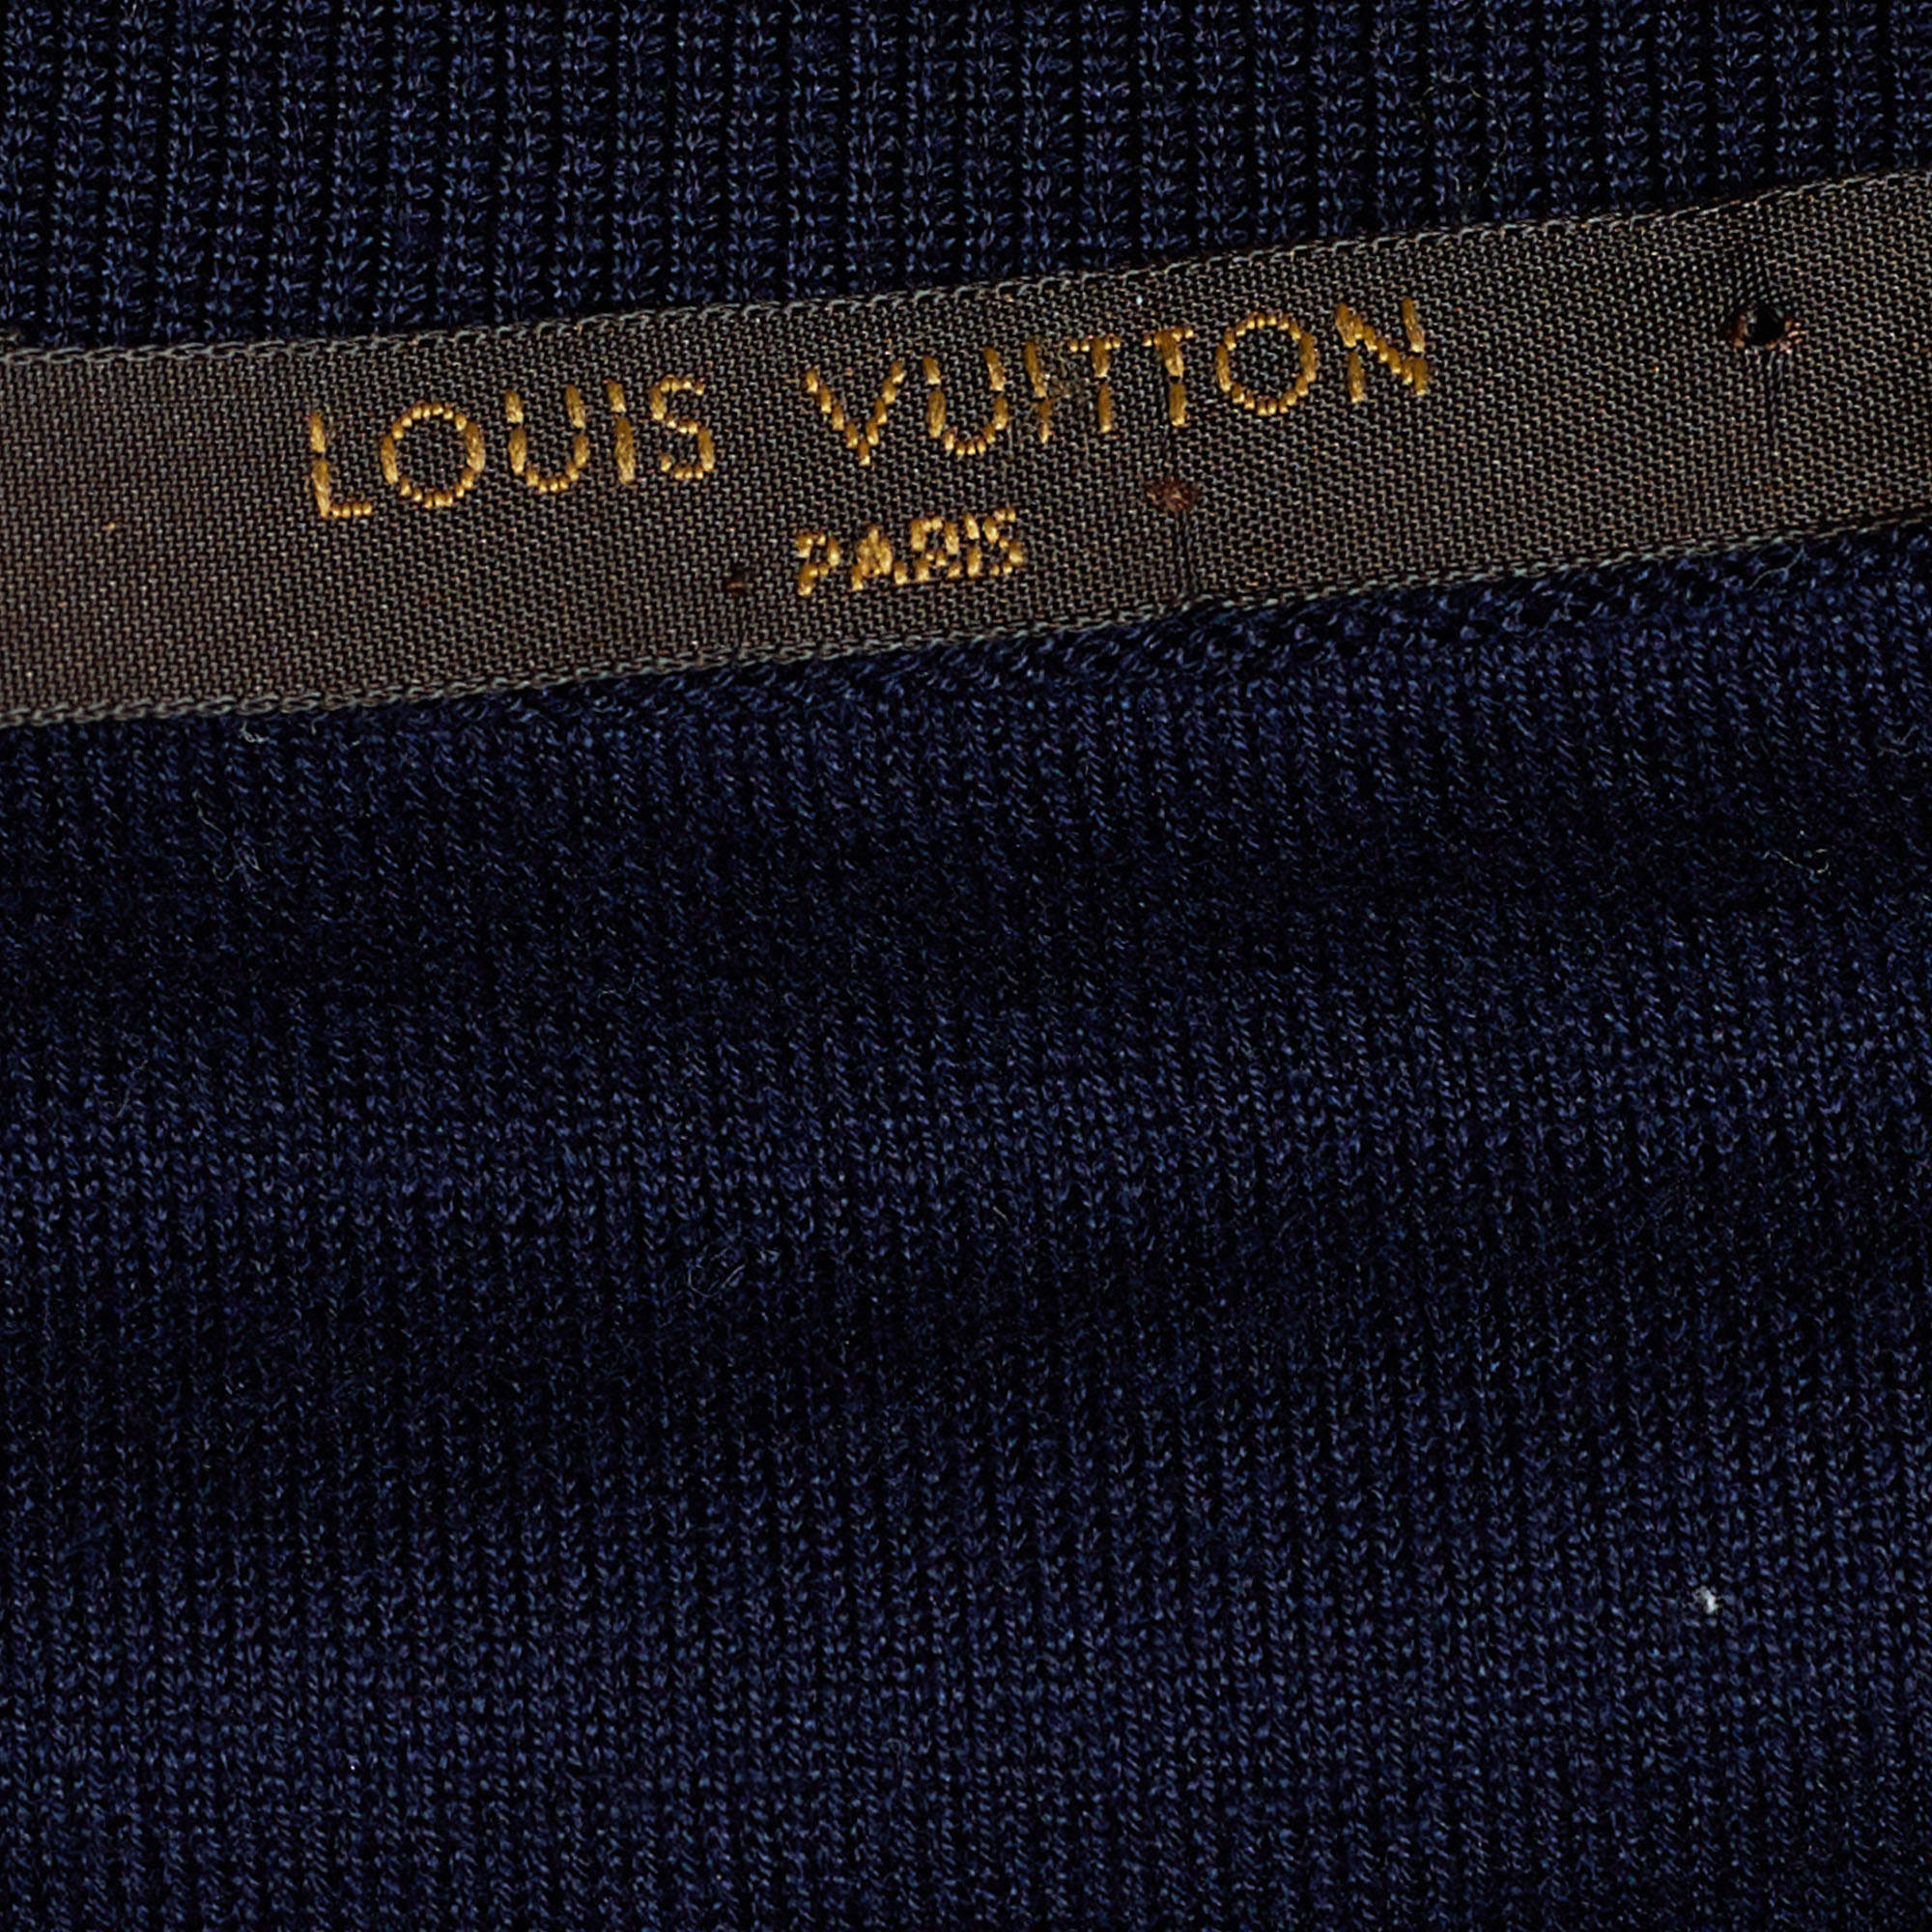 Louis Vuitton SS17 Chapman Brothers Elephant Shirt - Ākaibu Store